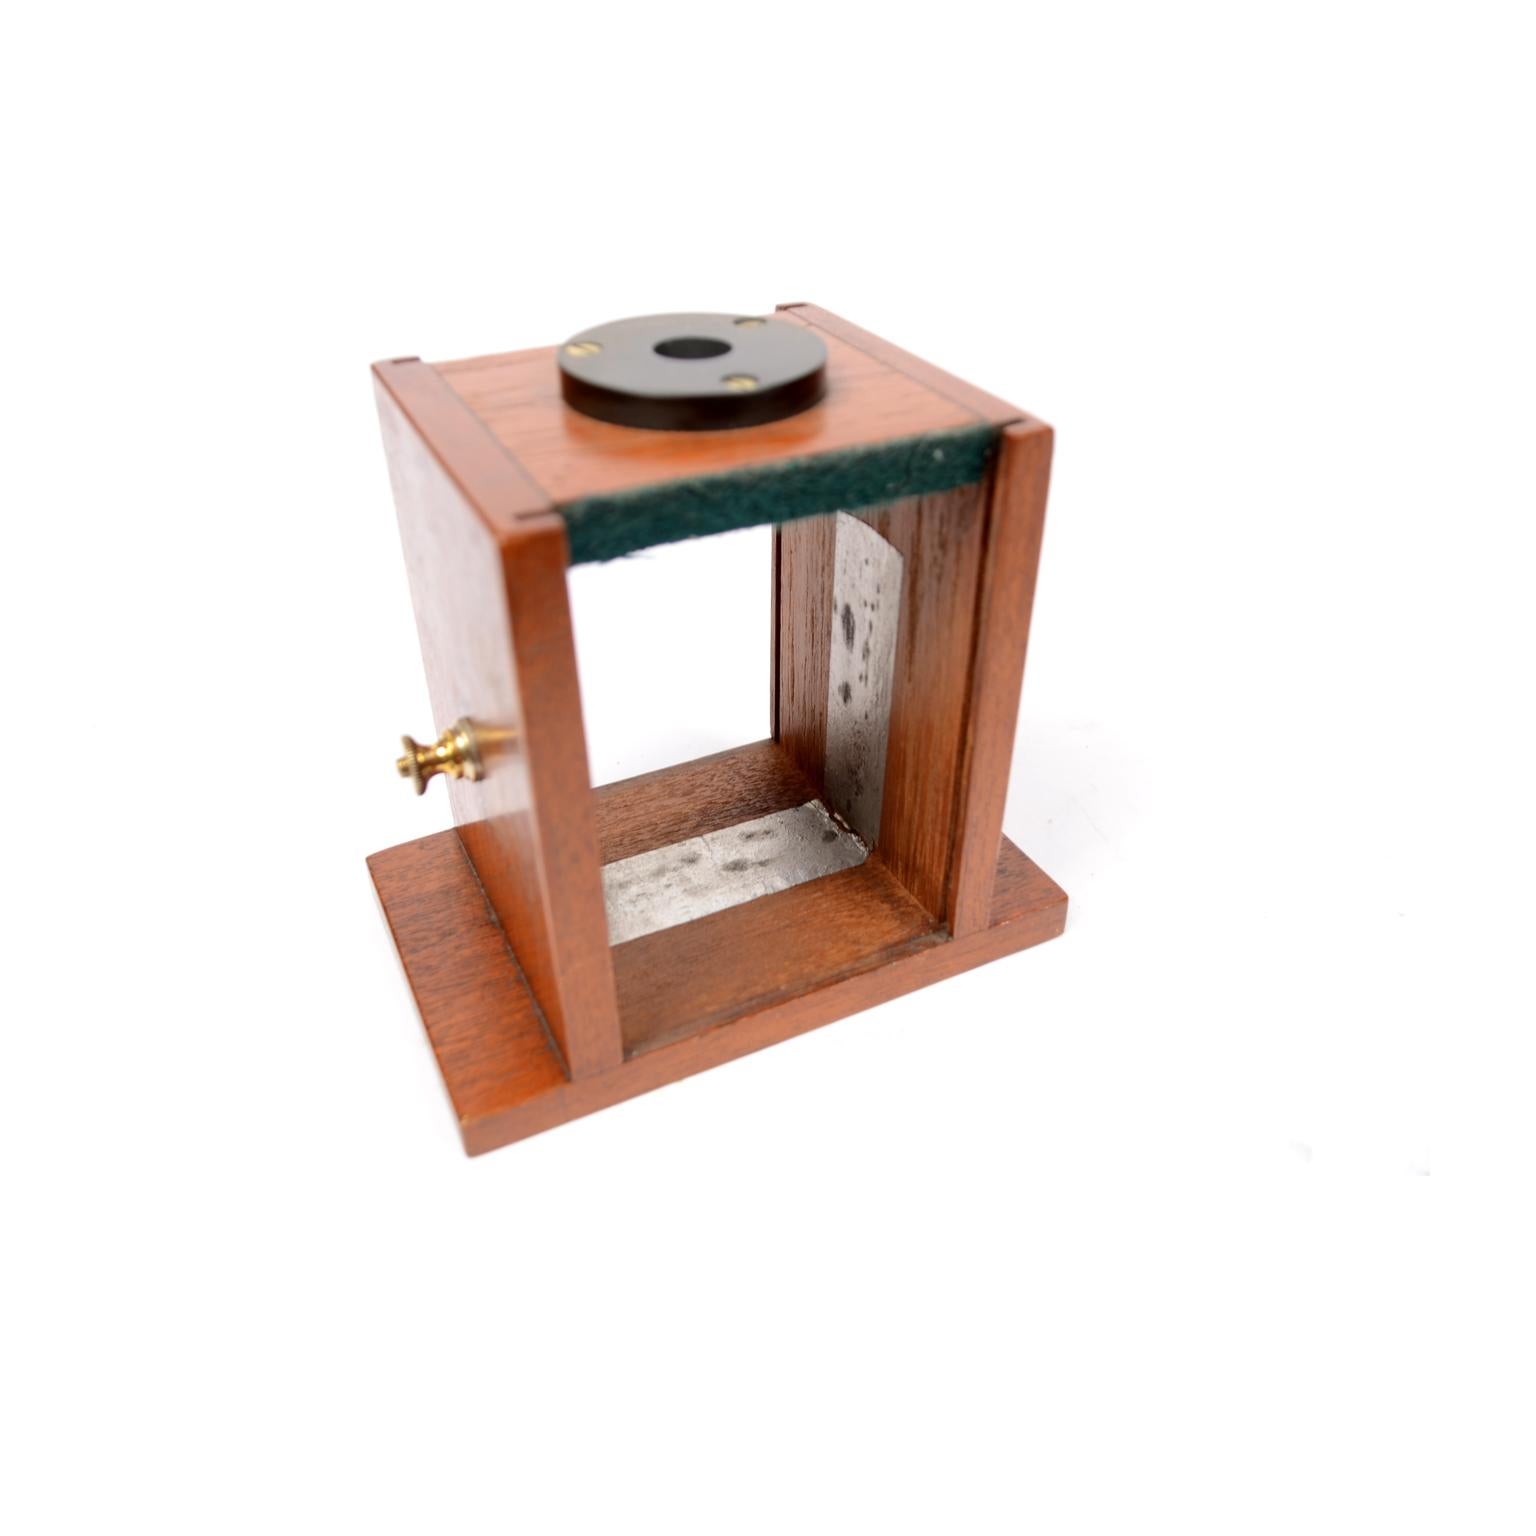 20th Century 1900s Mahogany Condenser Electroscope Antique Physics Measuring Instrument